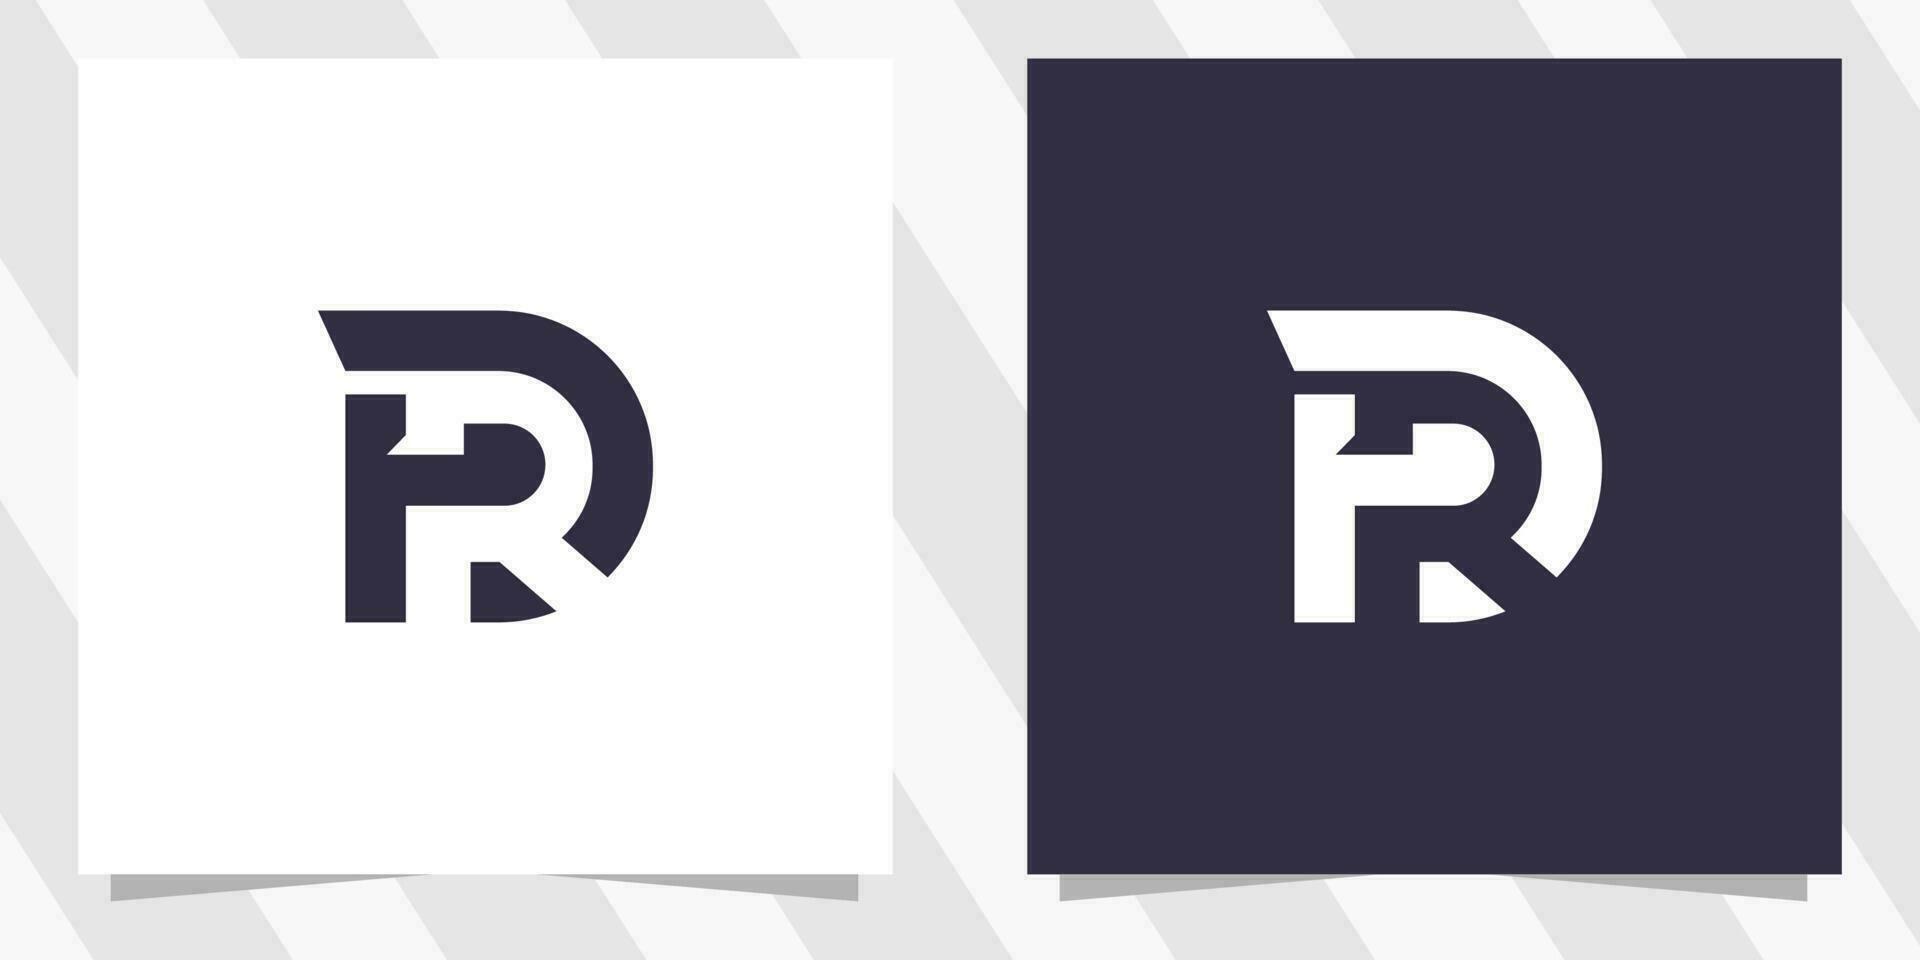 lettera pr rp logo design vettore